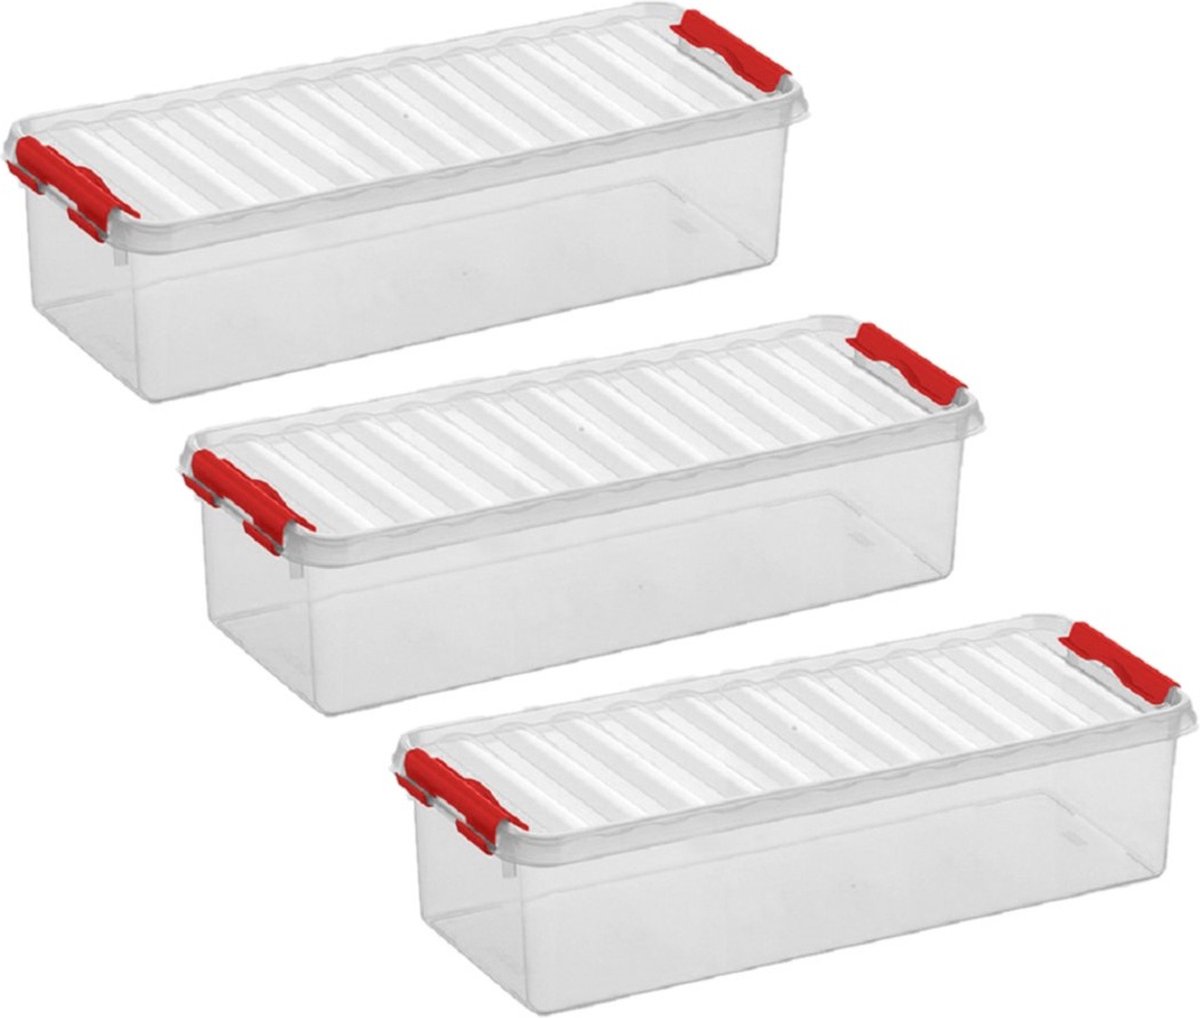 4x stuks opberg box/opbergdoos 3.5 liter 38.5 x 14 x 9.2 cm - Opslagbox - Opbergbak kunststof transparant/rood